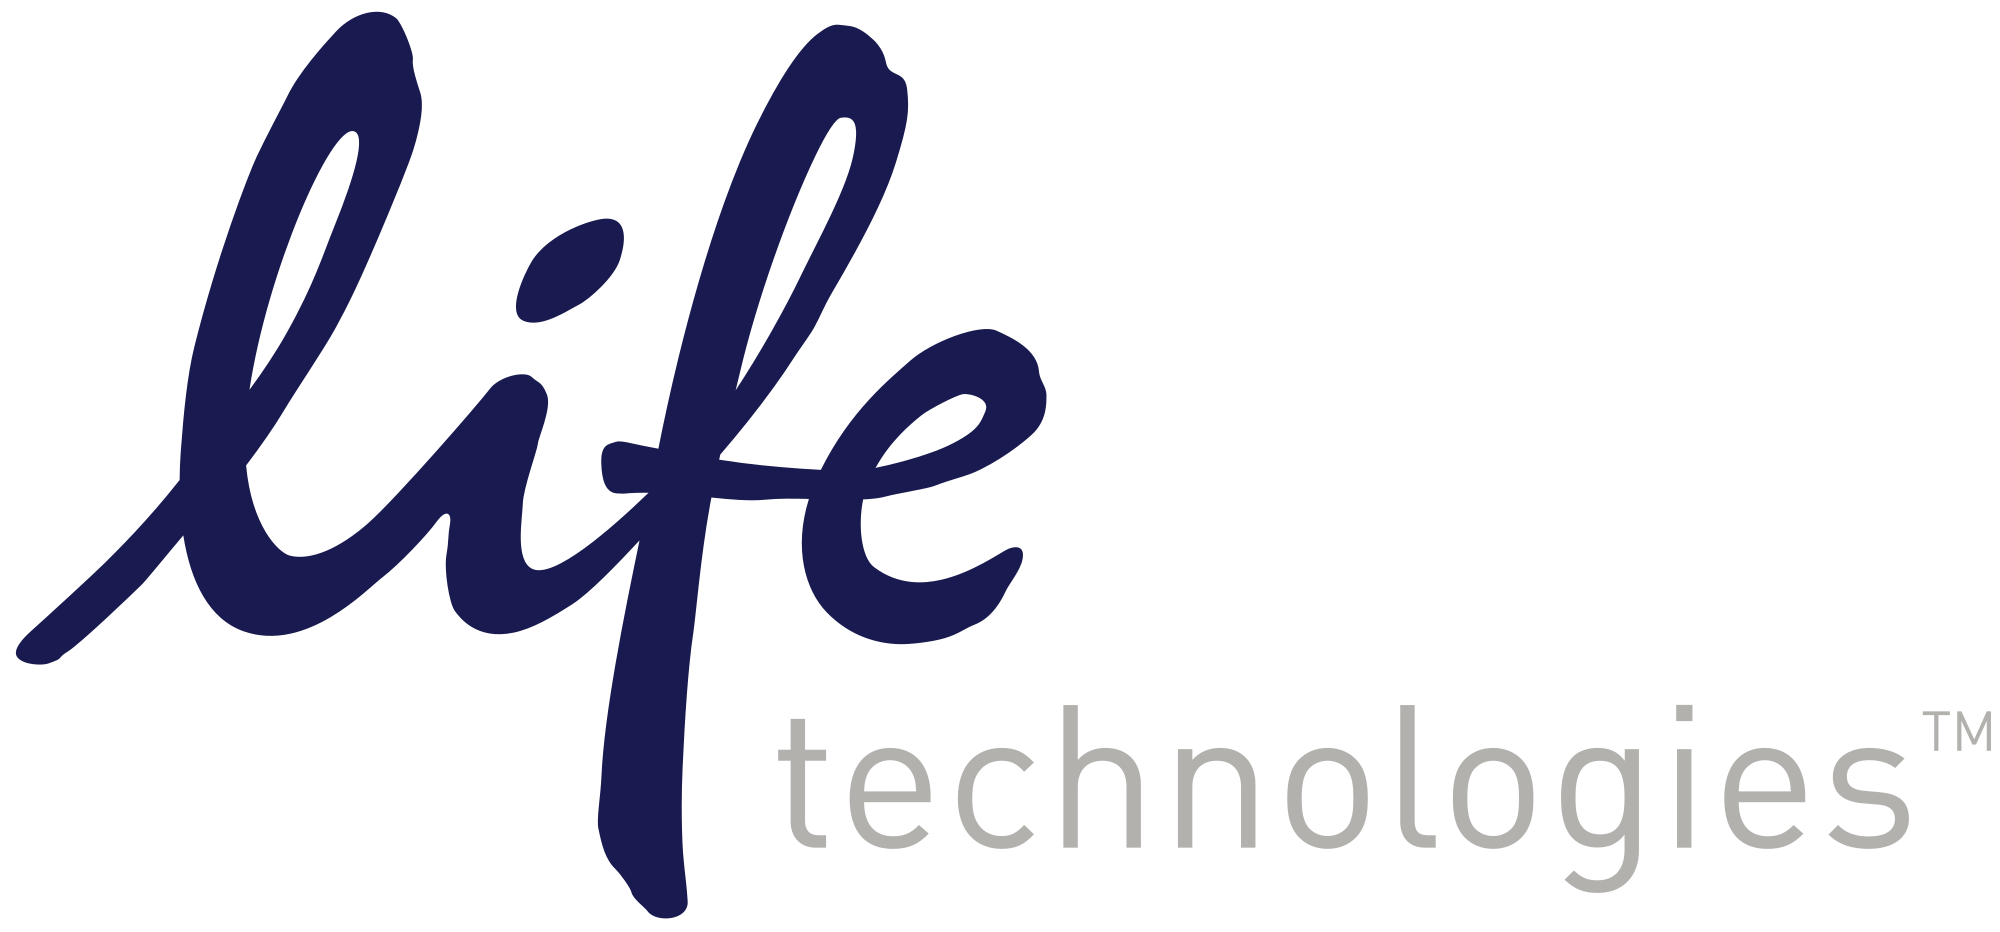 technology clipart technology logo